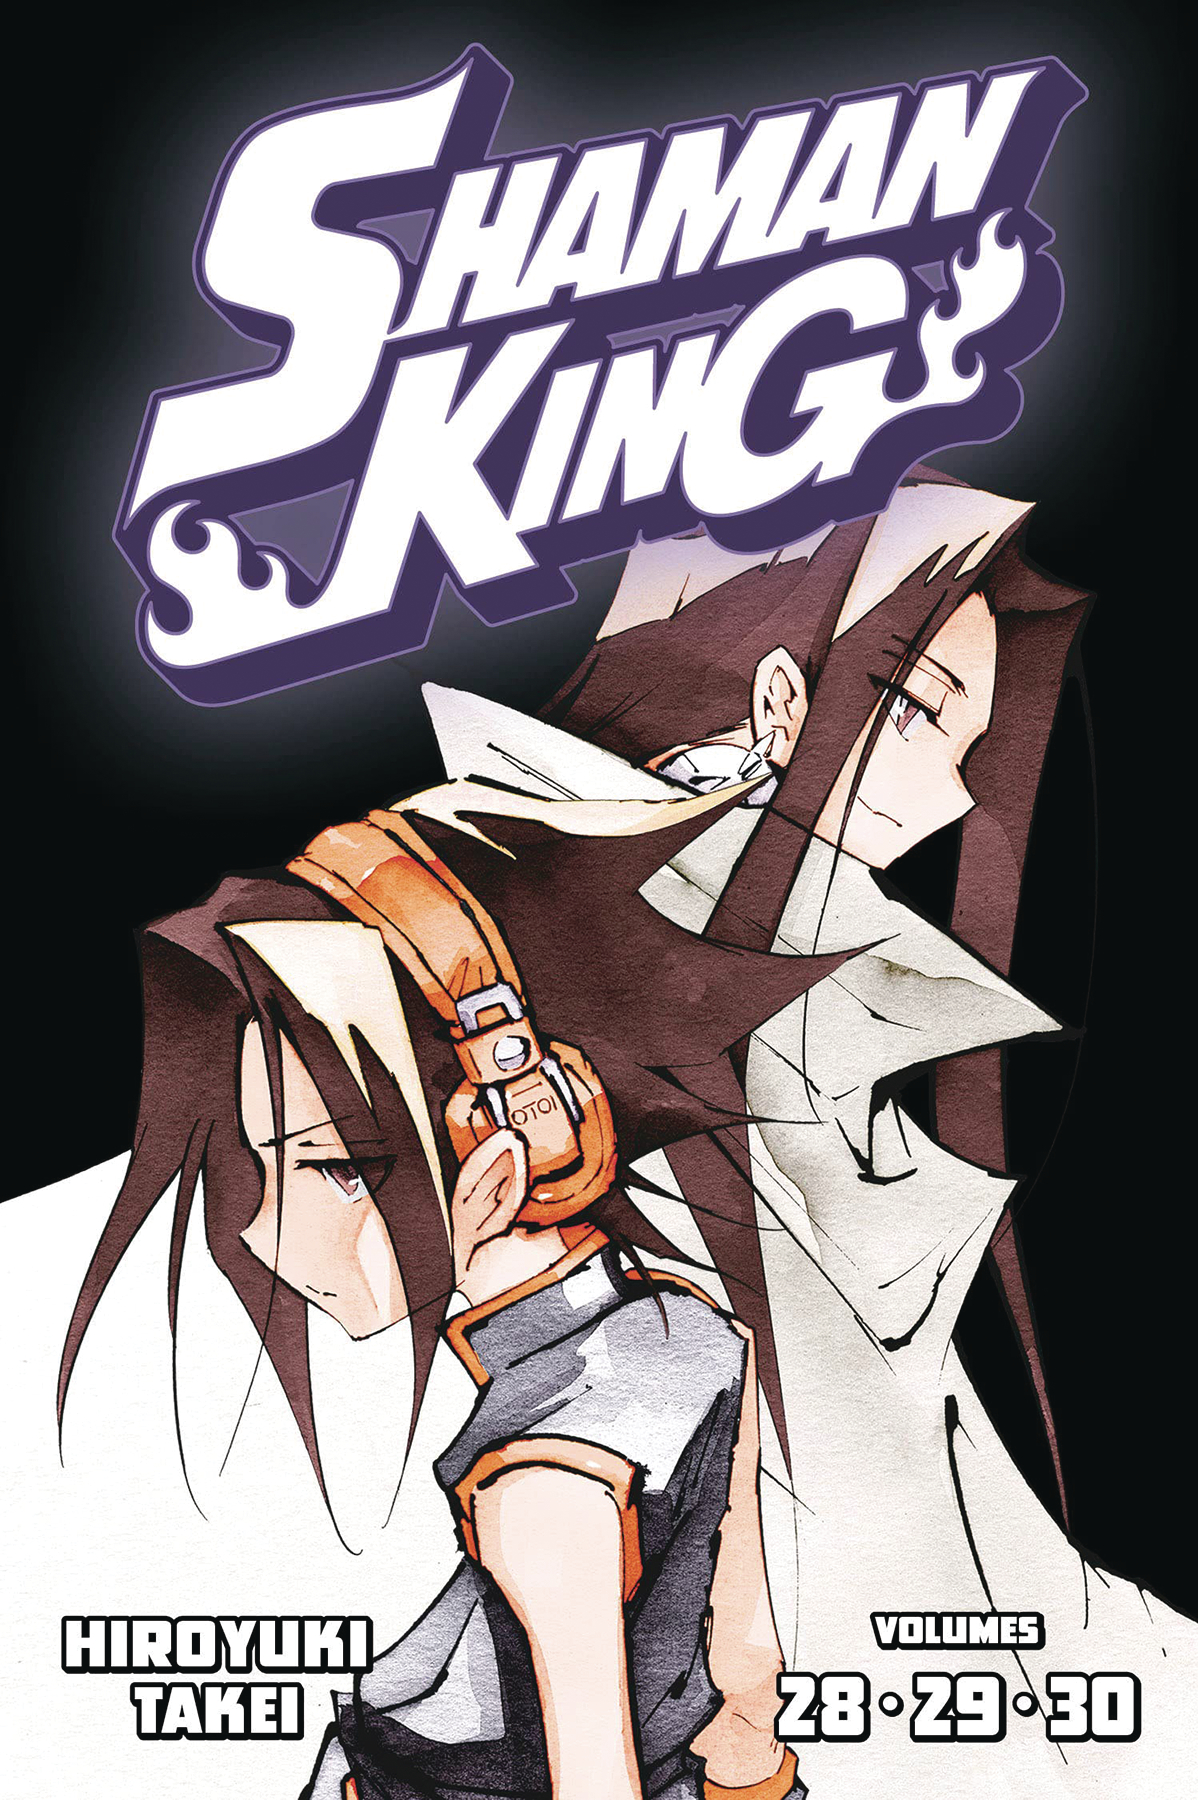 Shaman King (English Version) - SHAMAN KING